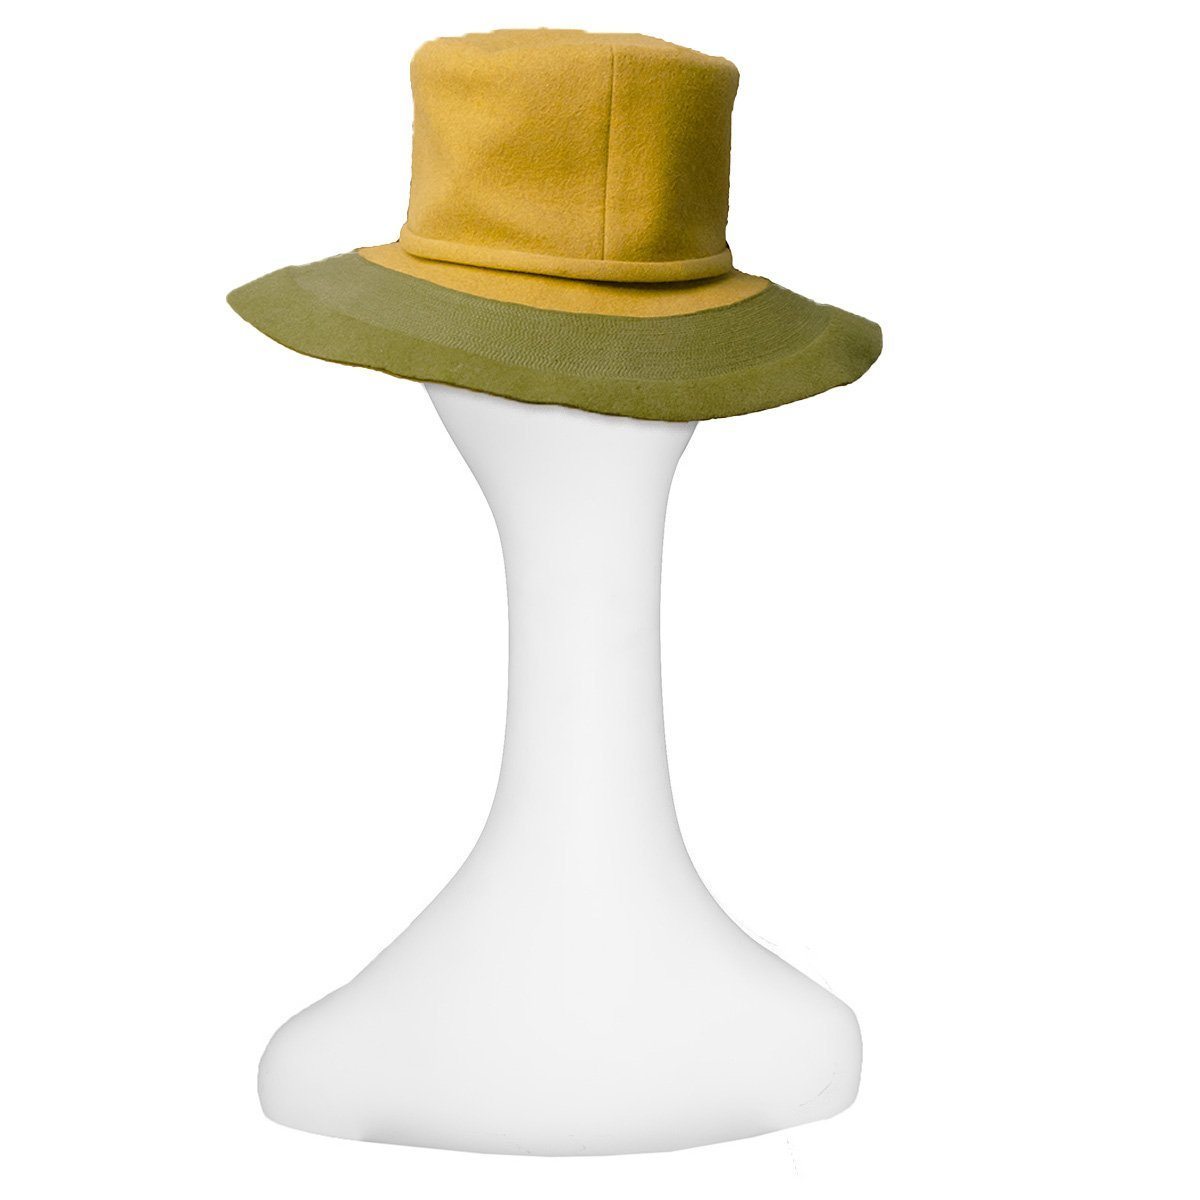 Vintage 60s Mod Wide Brim Hat by Leslie James, Green & Yellow Wool Felt